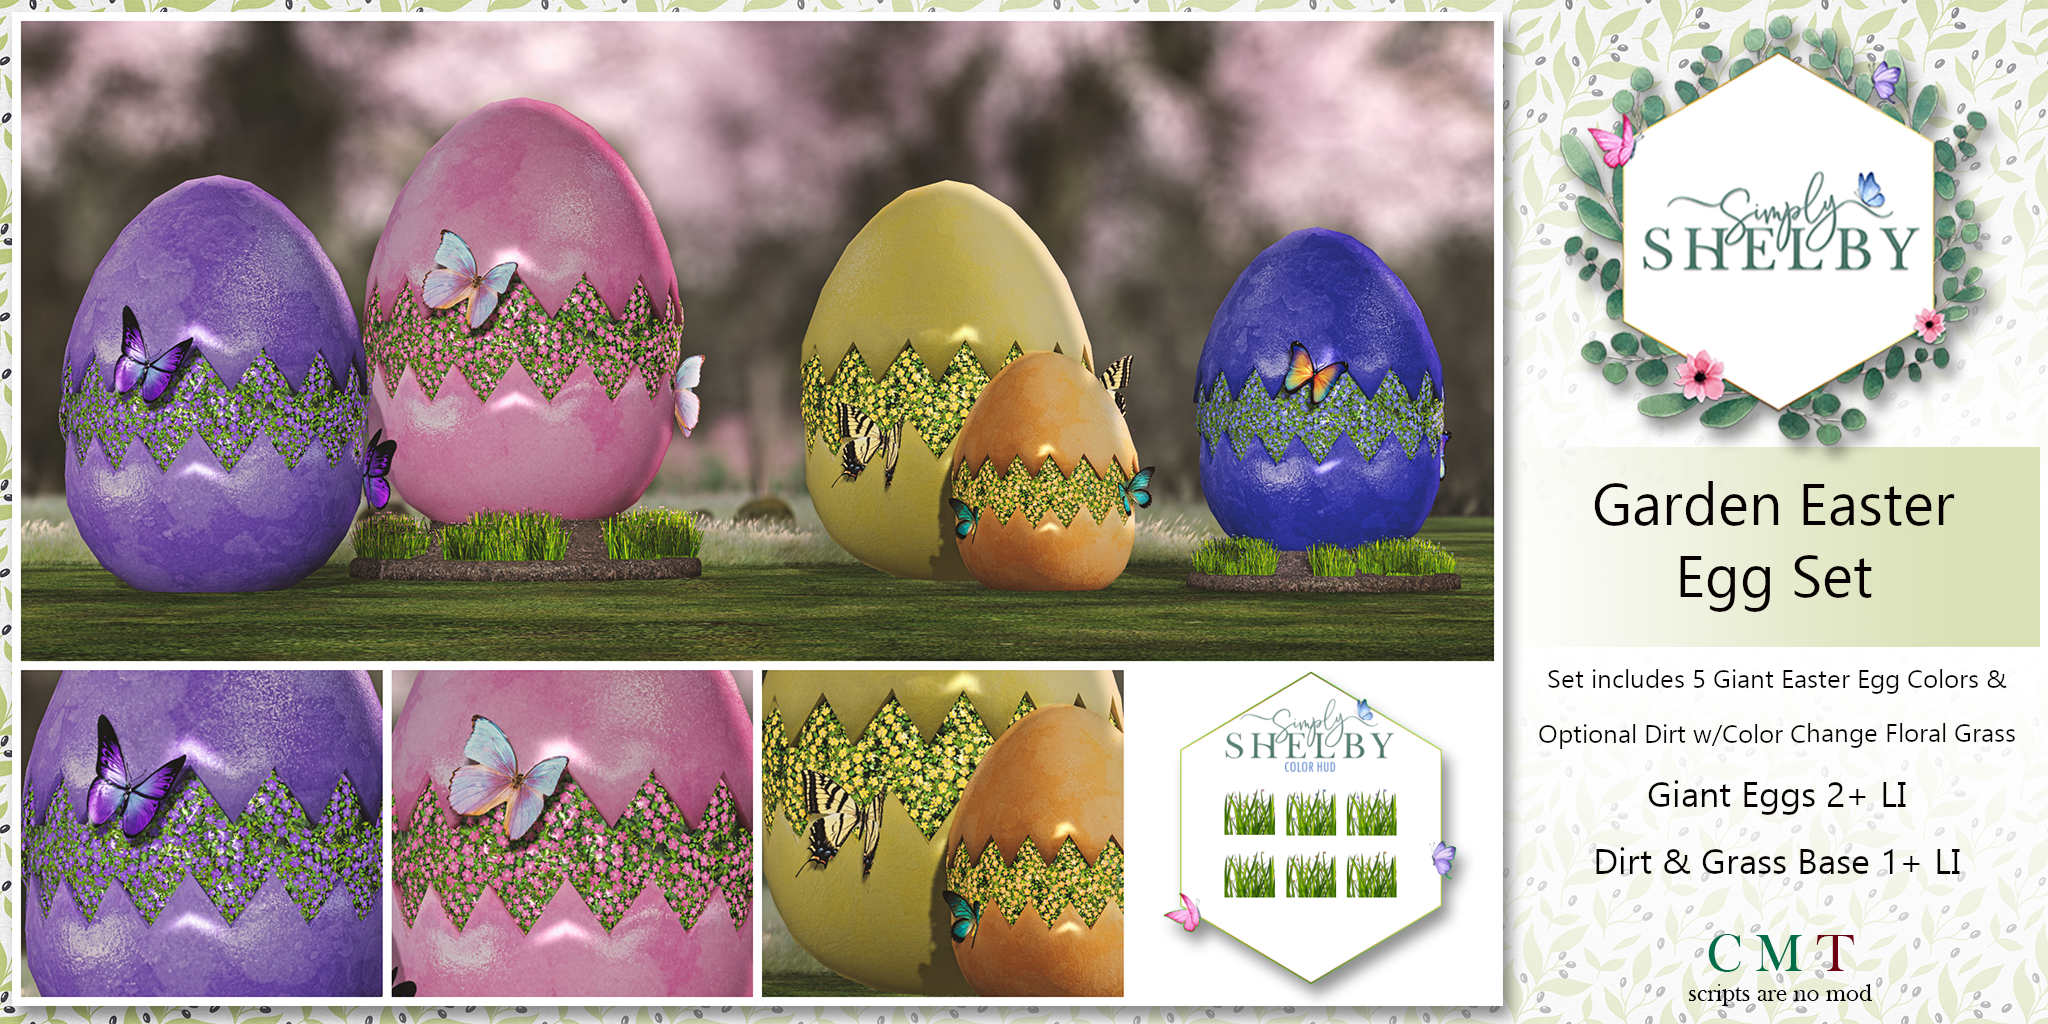 Simply Shelby – Garden Easter Egg Set